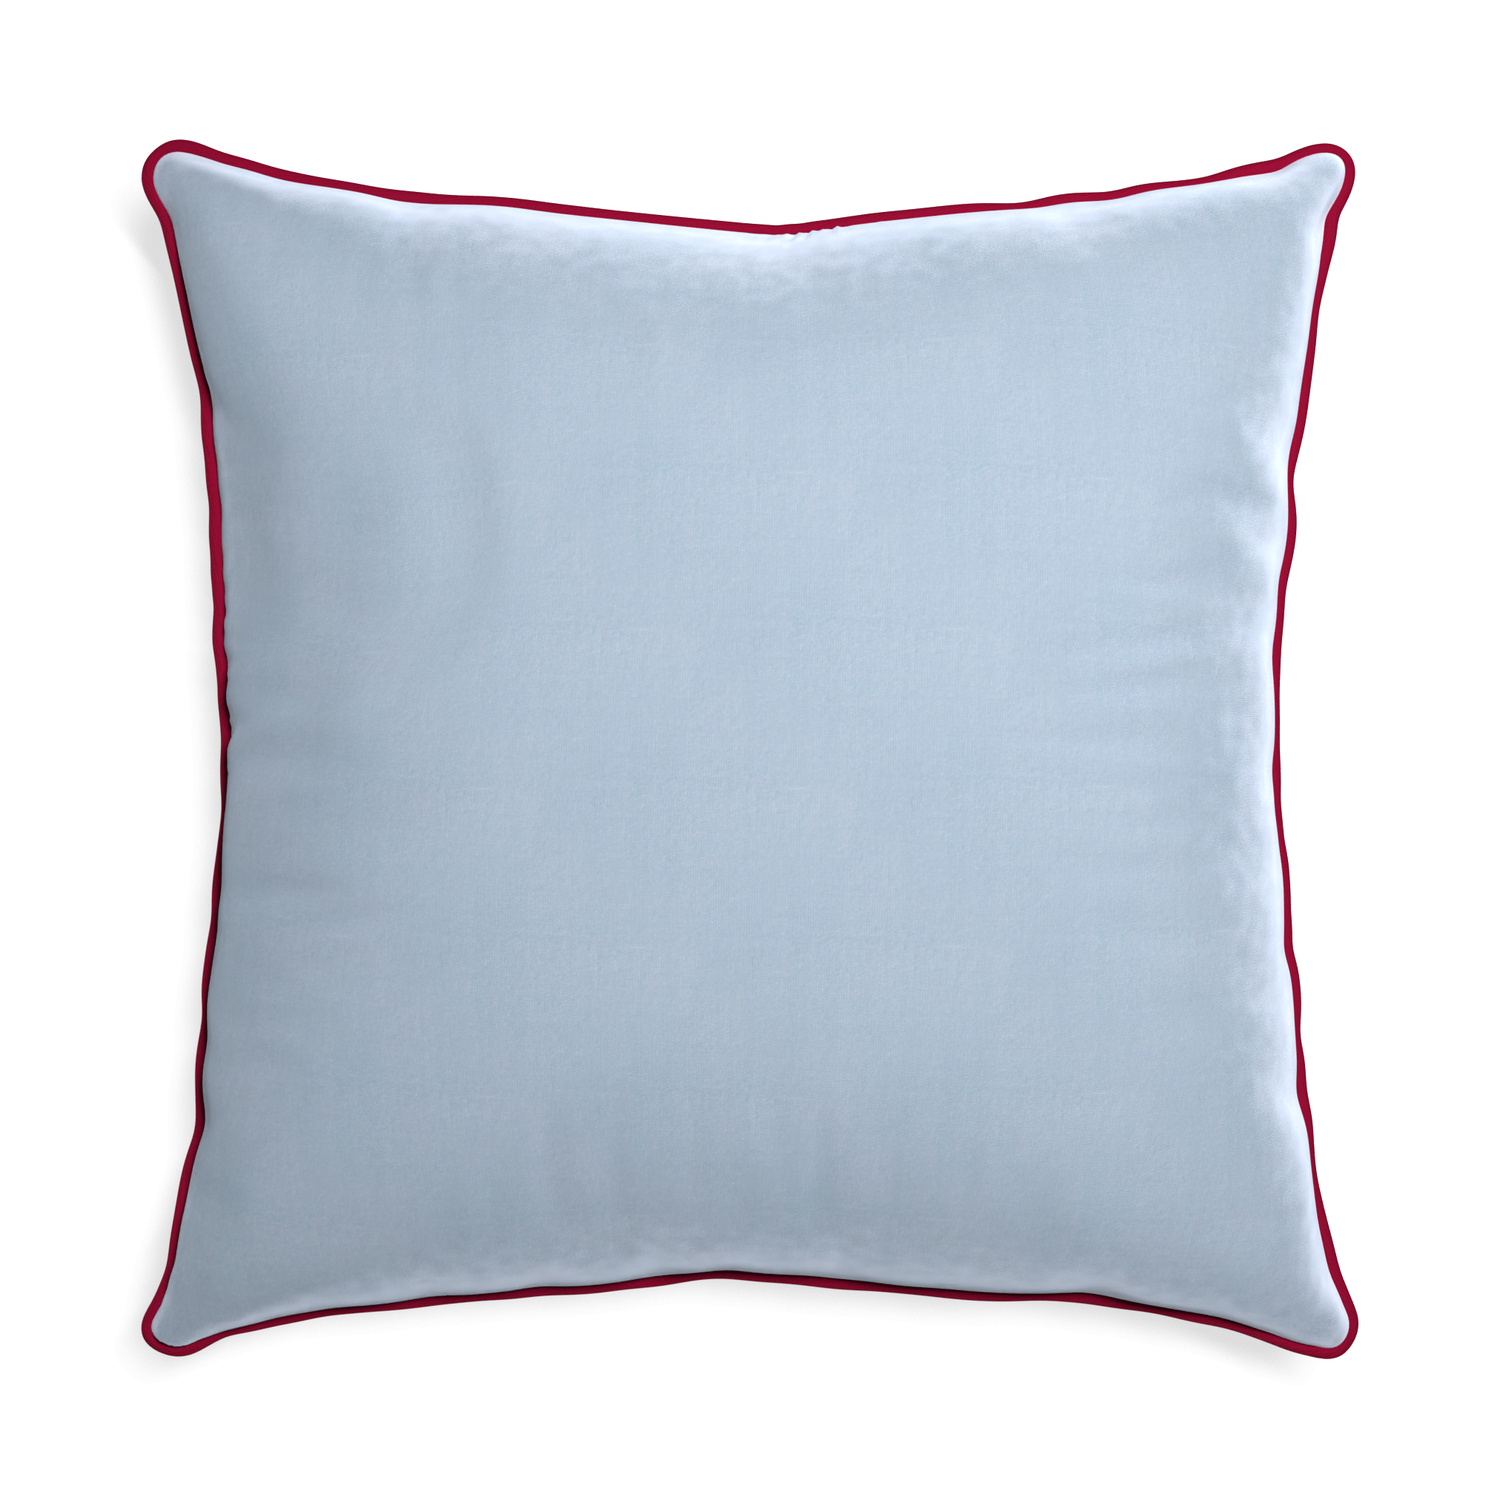 square light blue velvet pillow with dark red piping